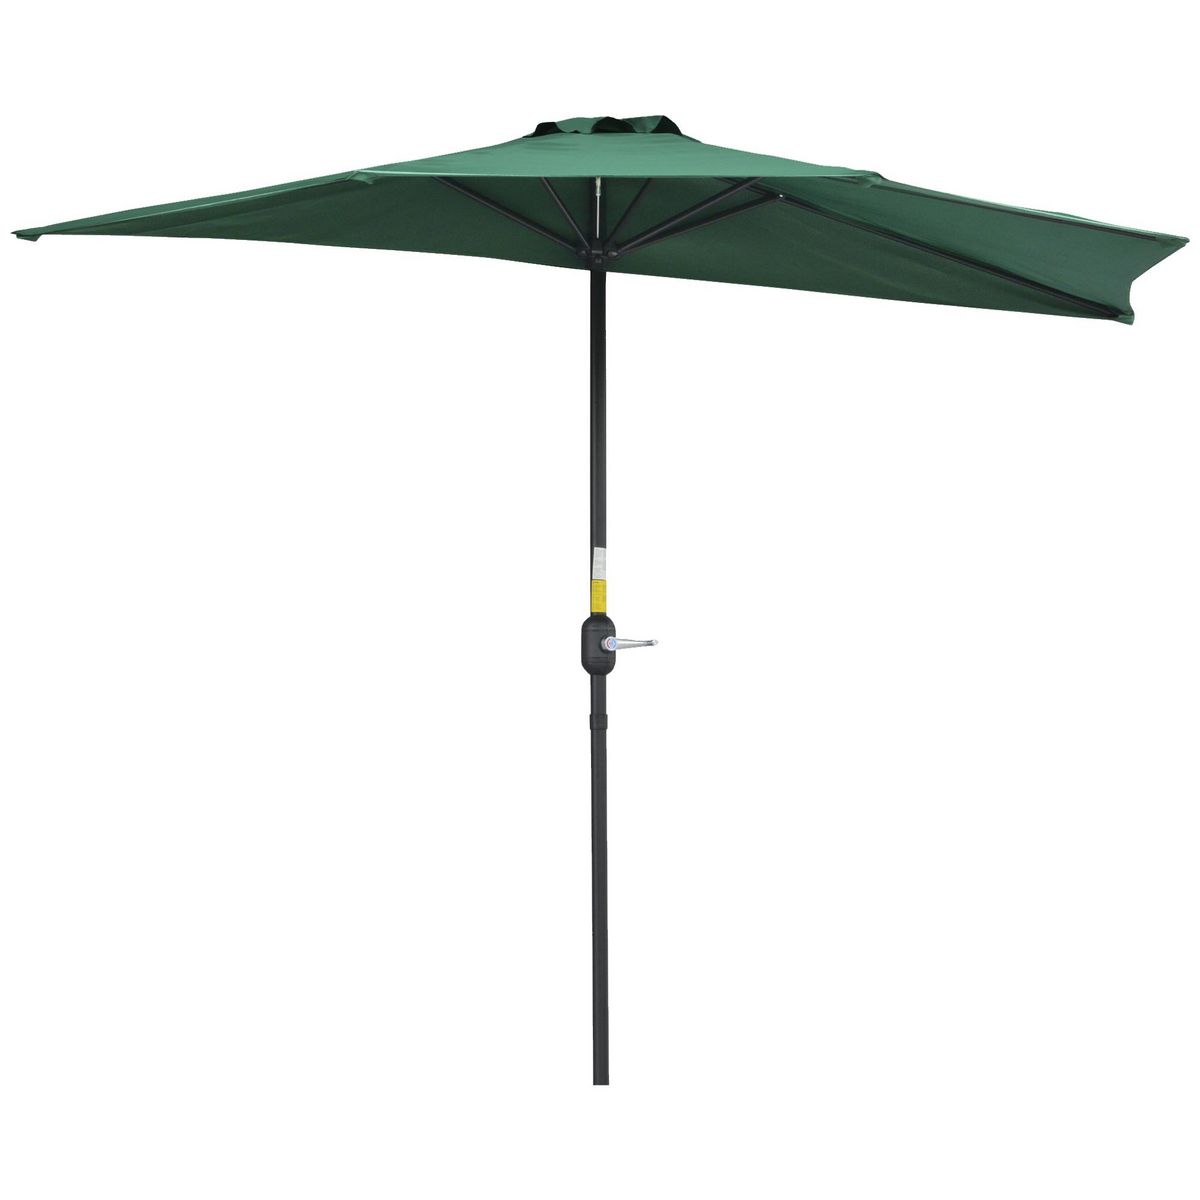 OUTSUNNY Demi parasol, parasol de balcon 5 entretoises métal polyester 2,69L x 1,38l x 2,36H m vert